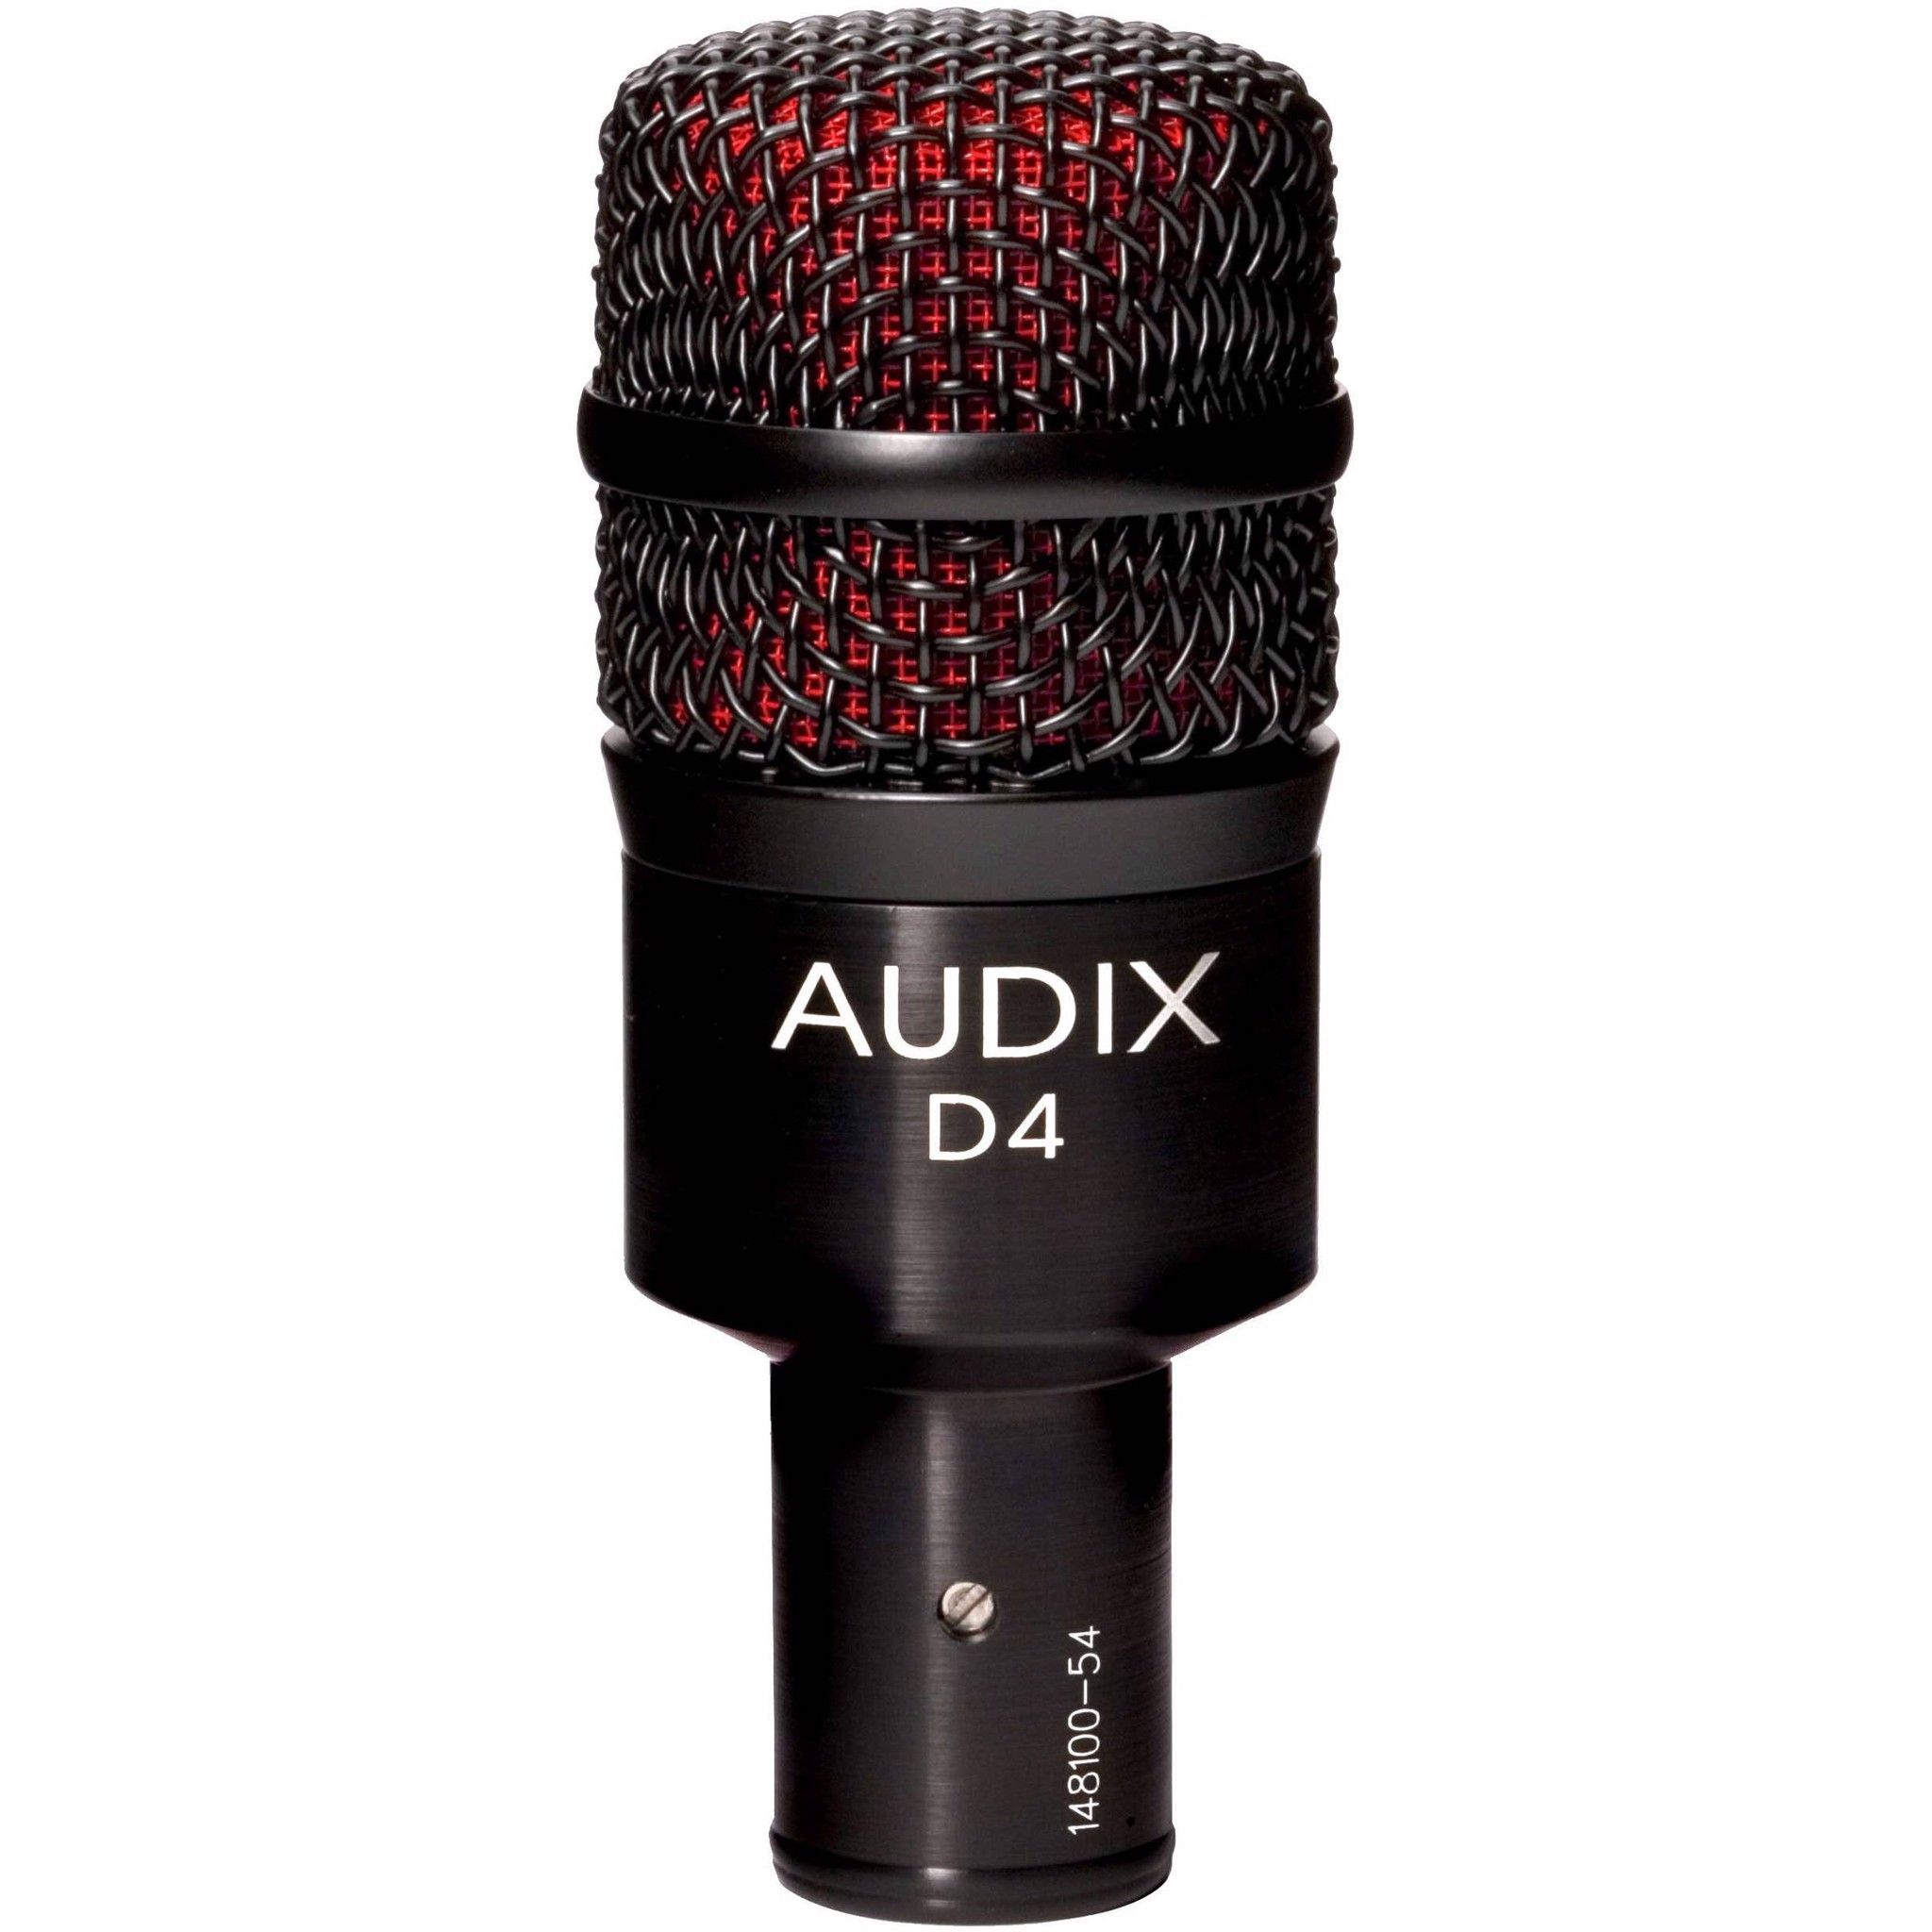  Micro Audix - D4 